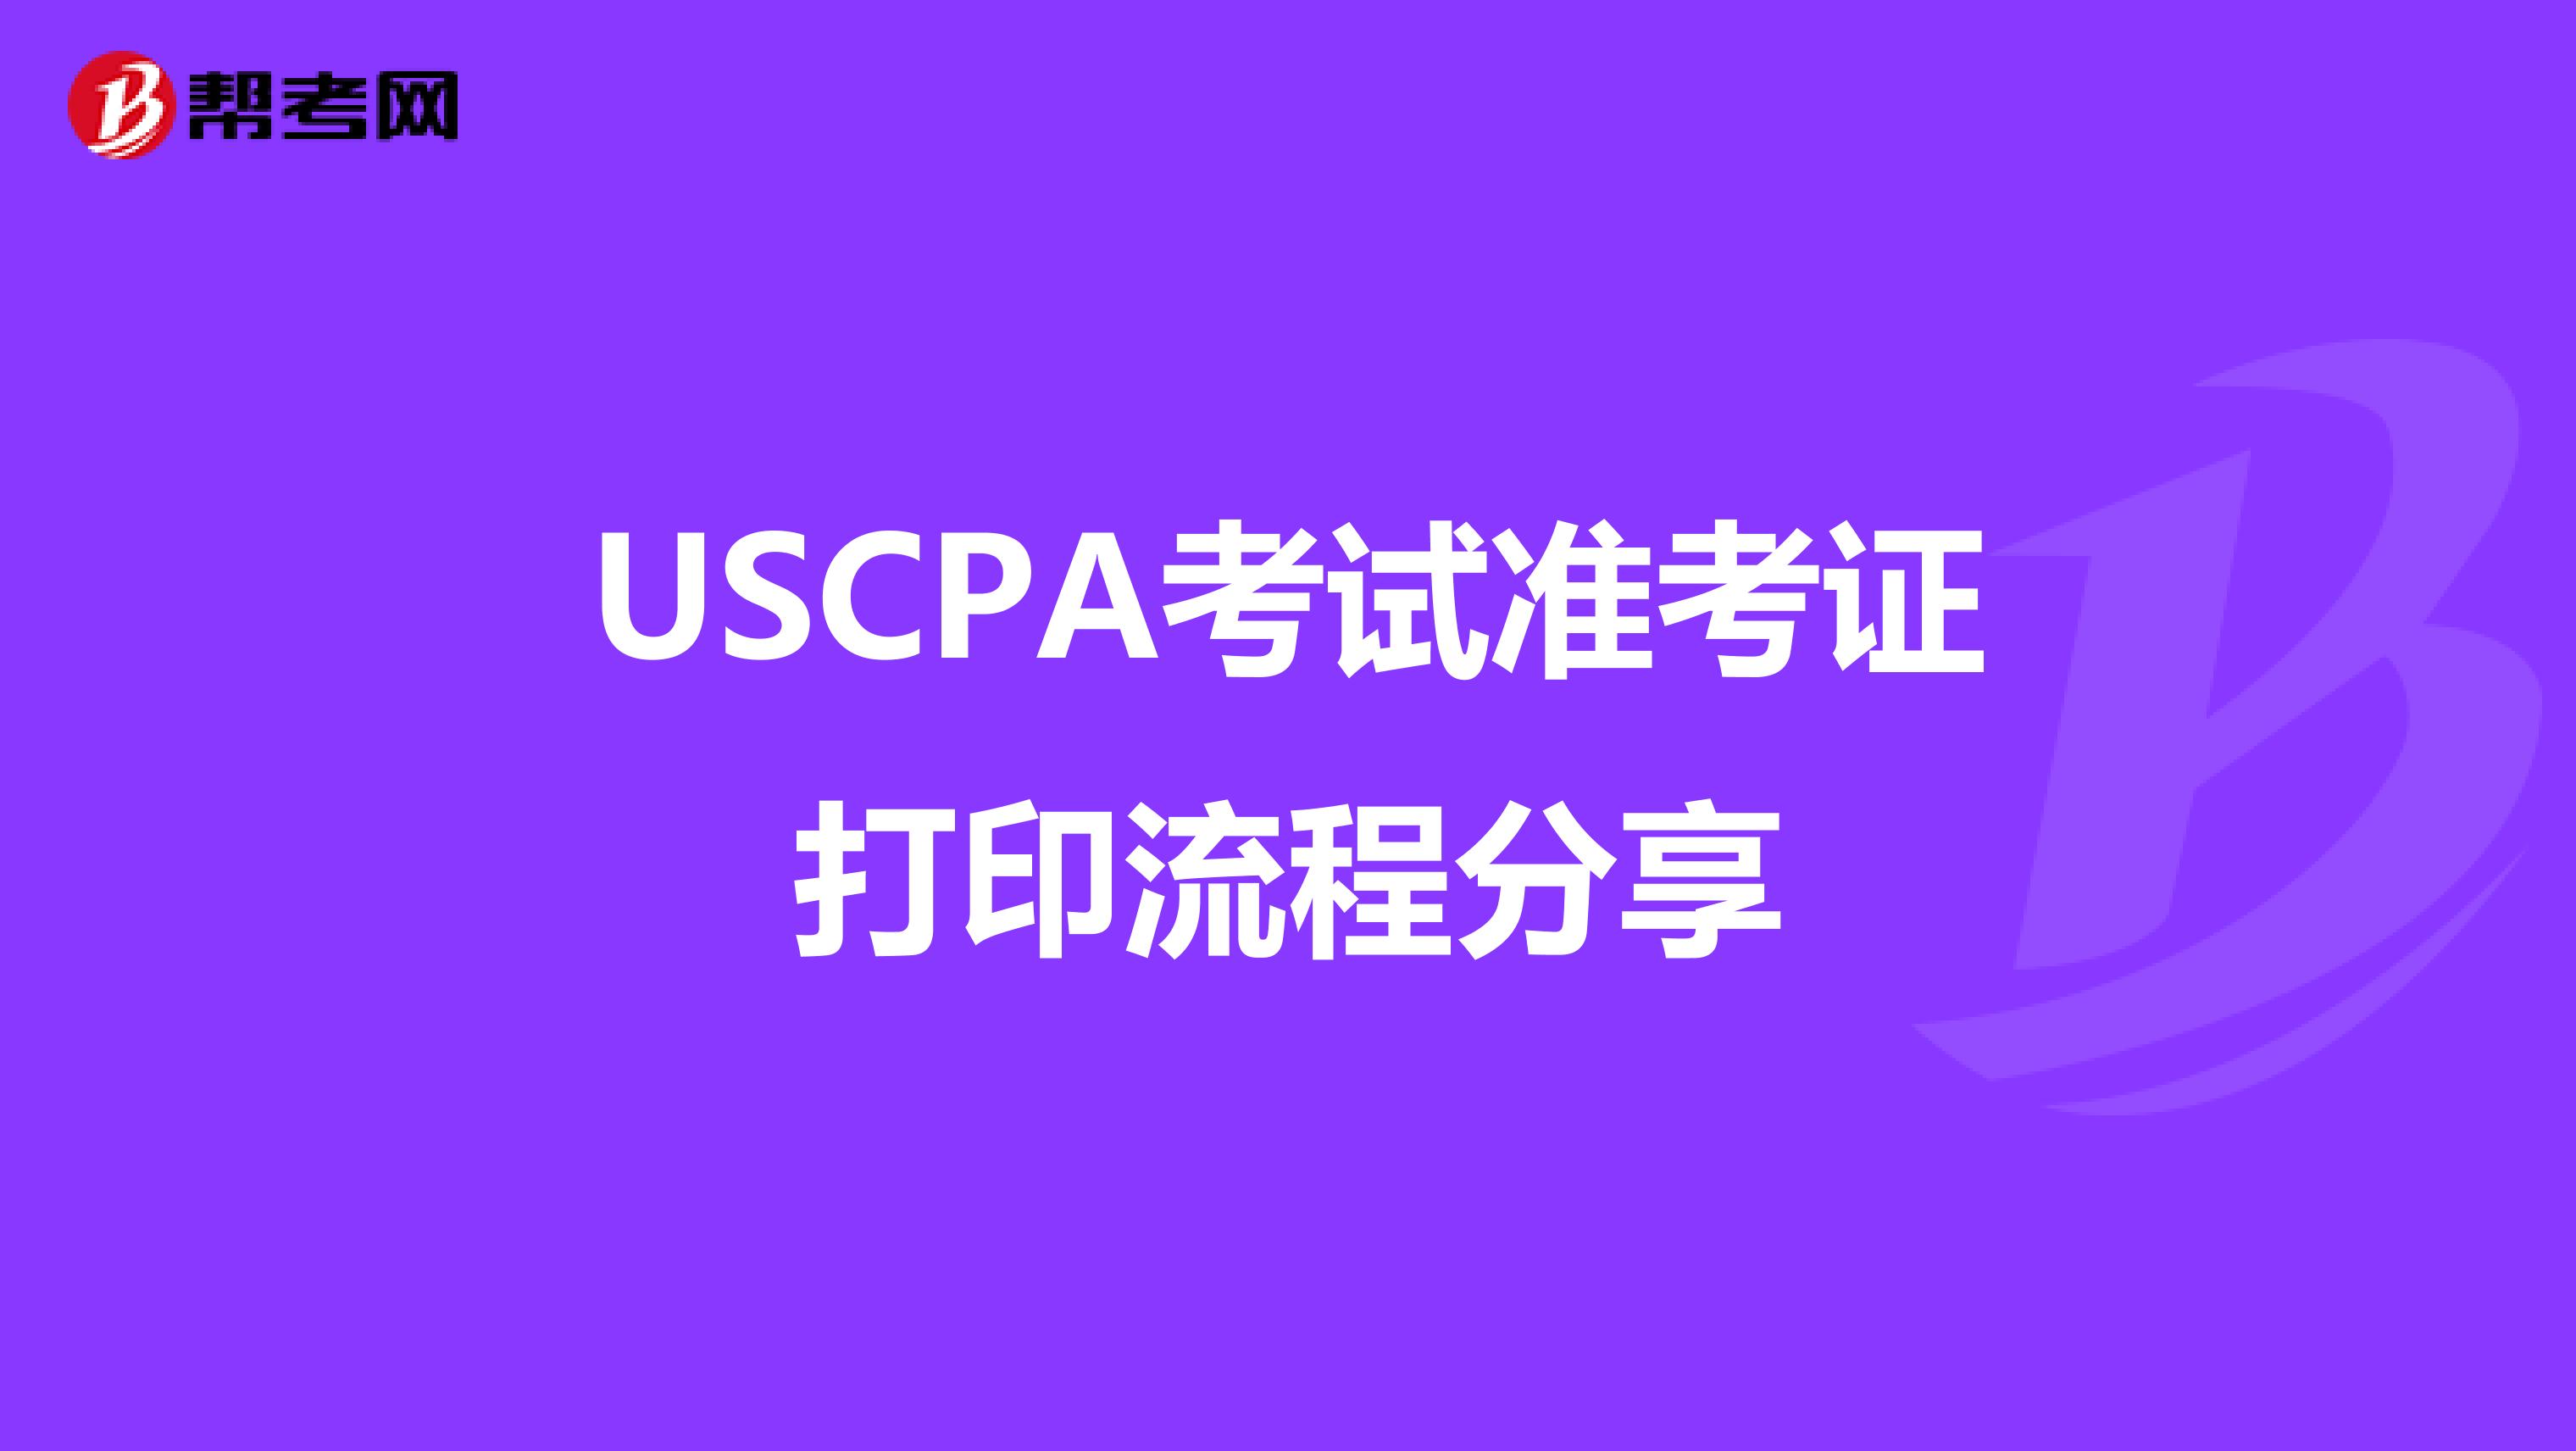 USCPA考试准考证打印流程分享